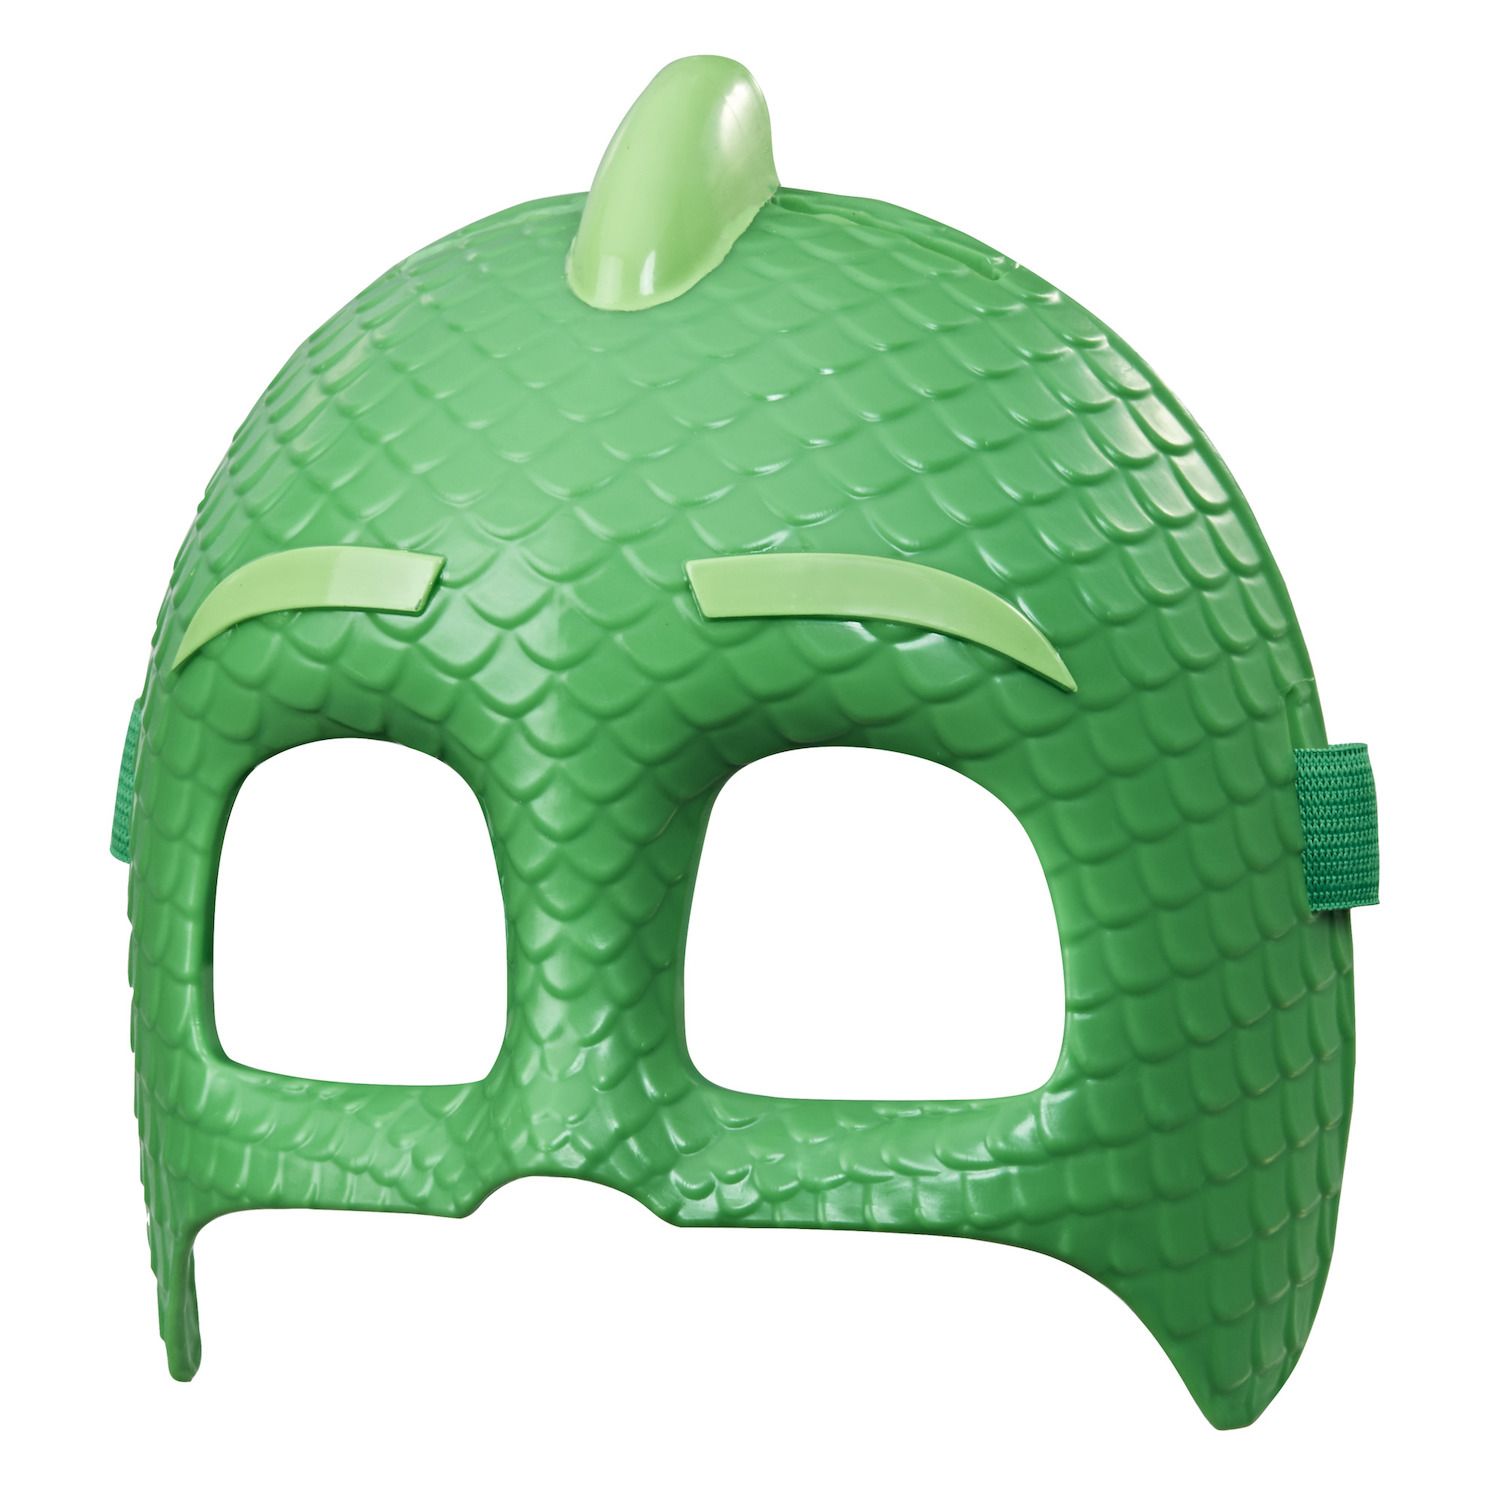 Image for Hasbro PJ Masks Gekko Hero Mask Toy by at Kohl's.